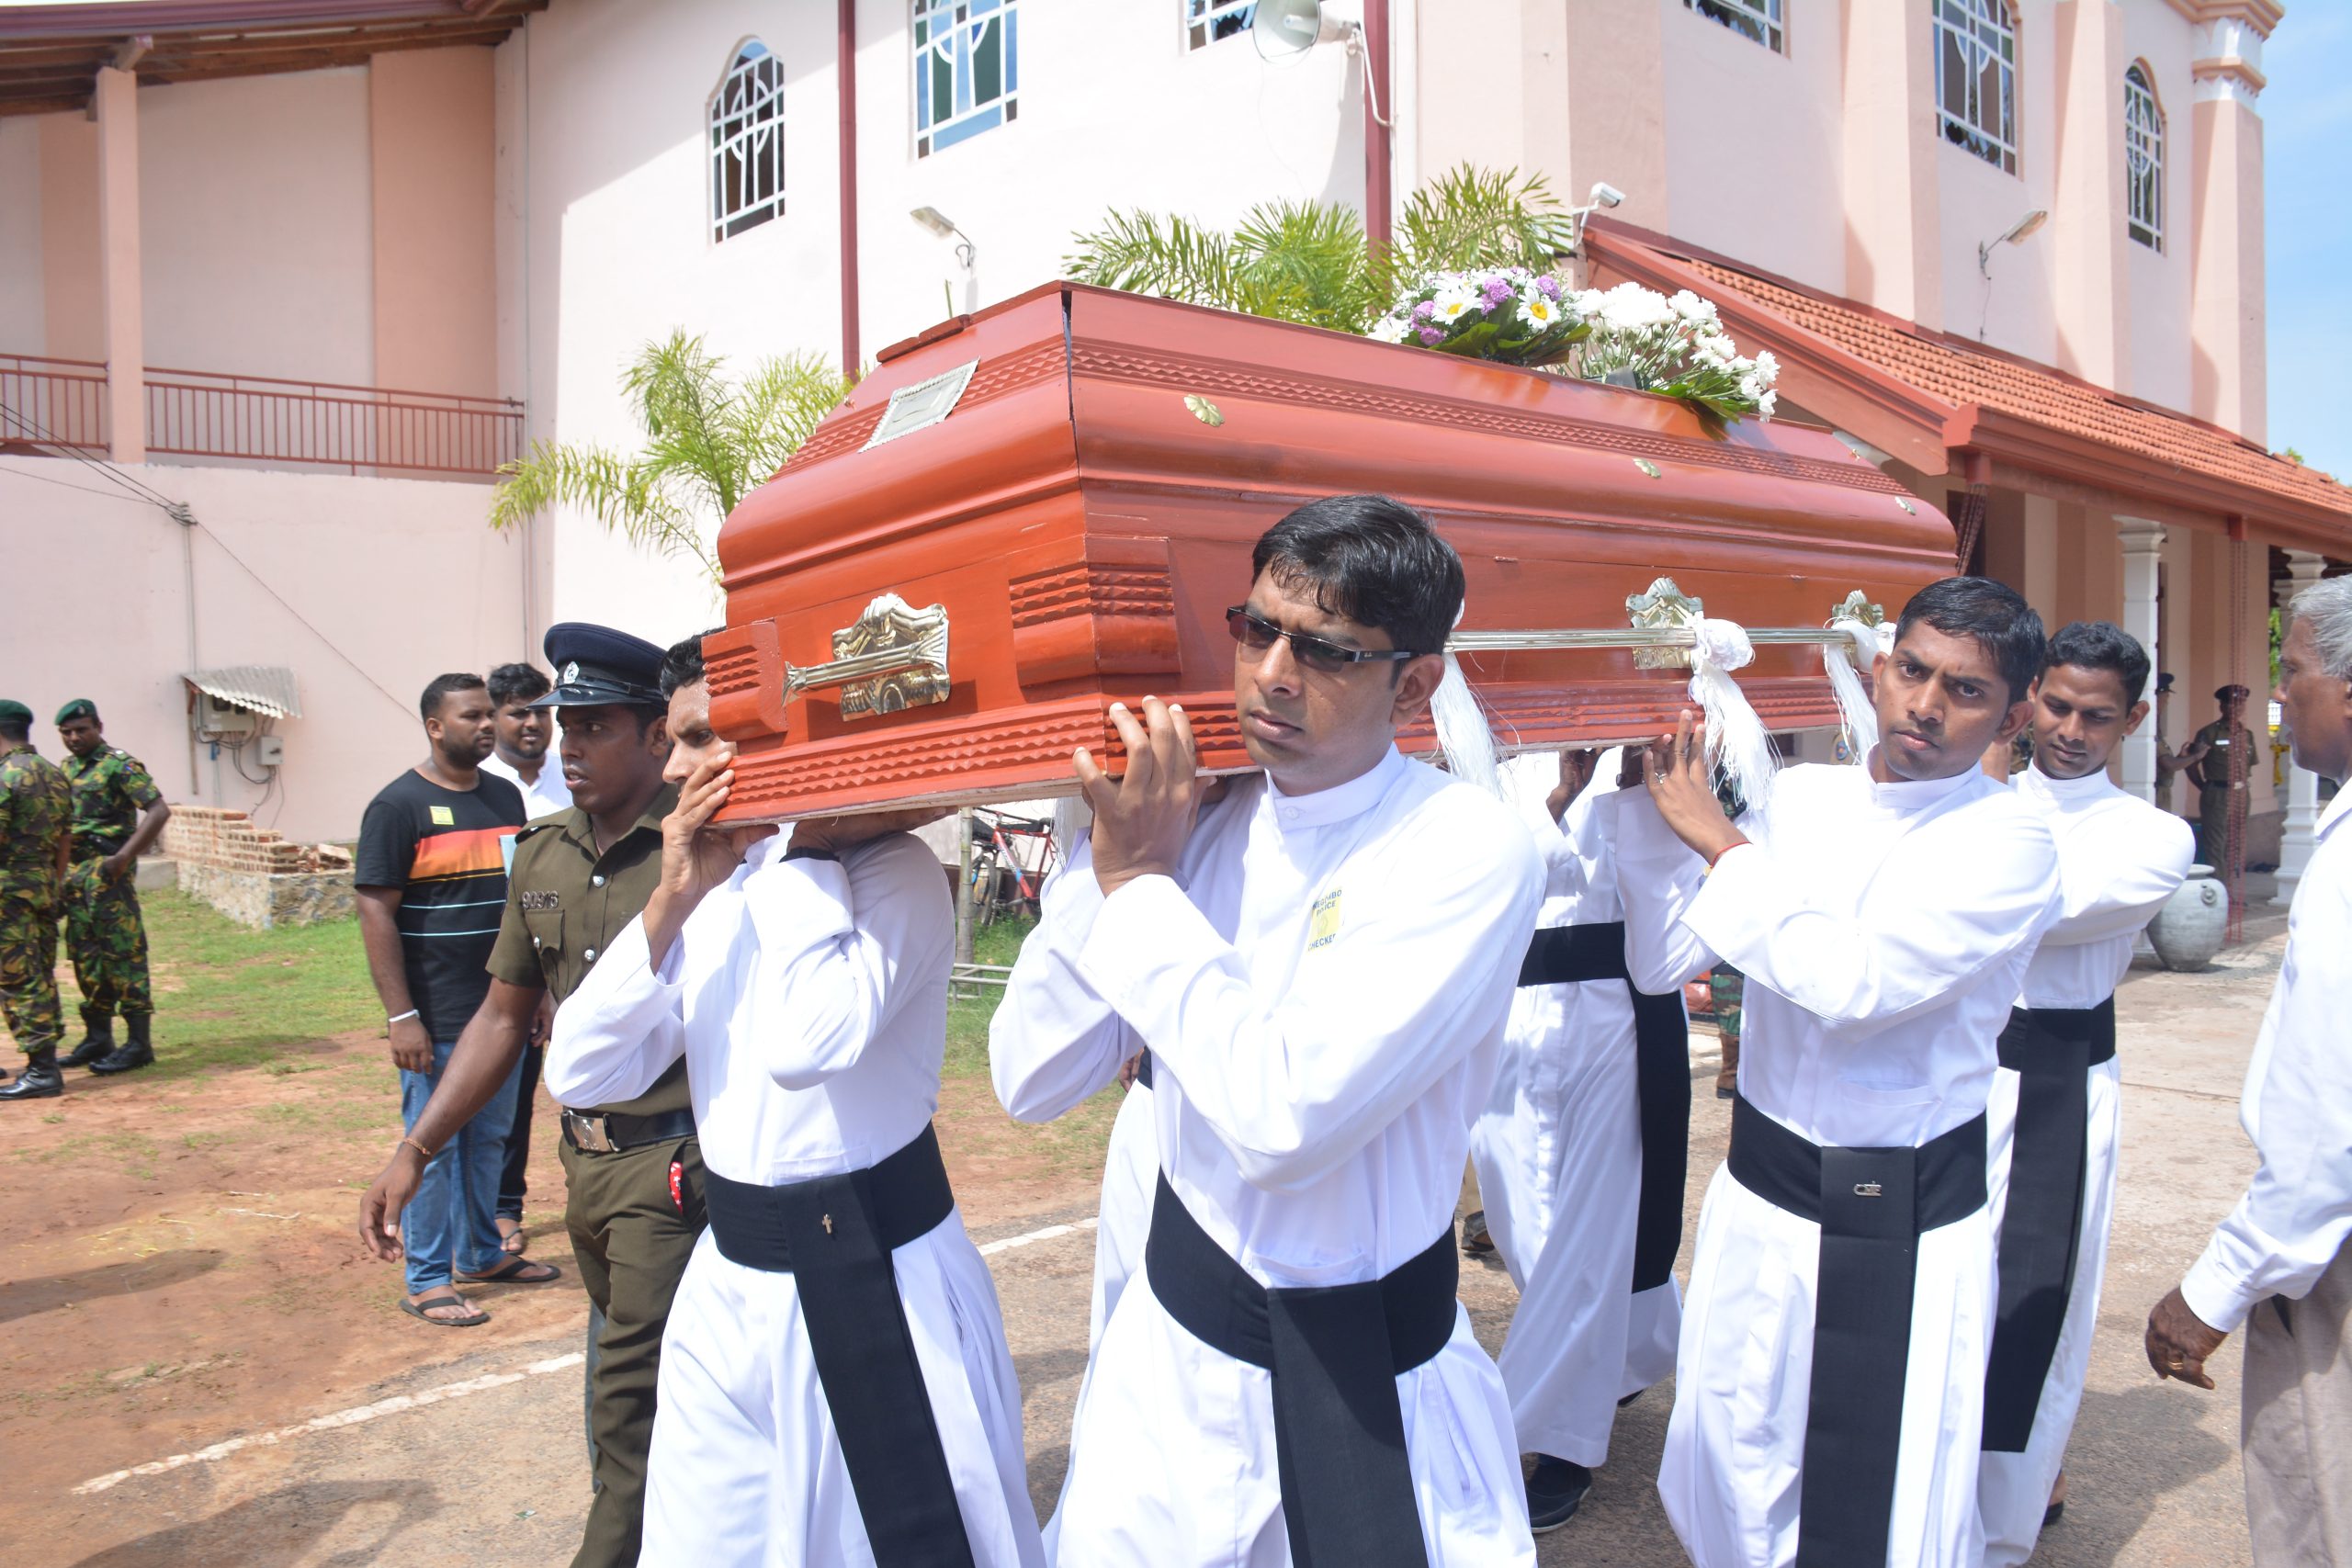 Funeral service for victims of the Easter Sunday bombing at St Sebastian’s Church in Katuwapitiya, Negombo (Sri Lanka) on 23rd April 2019. Image: Roshan Pradeep & T Sunil.